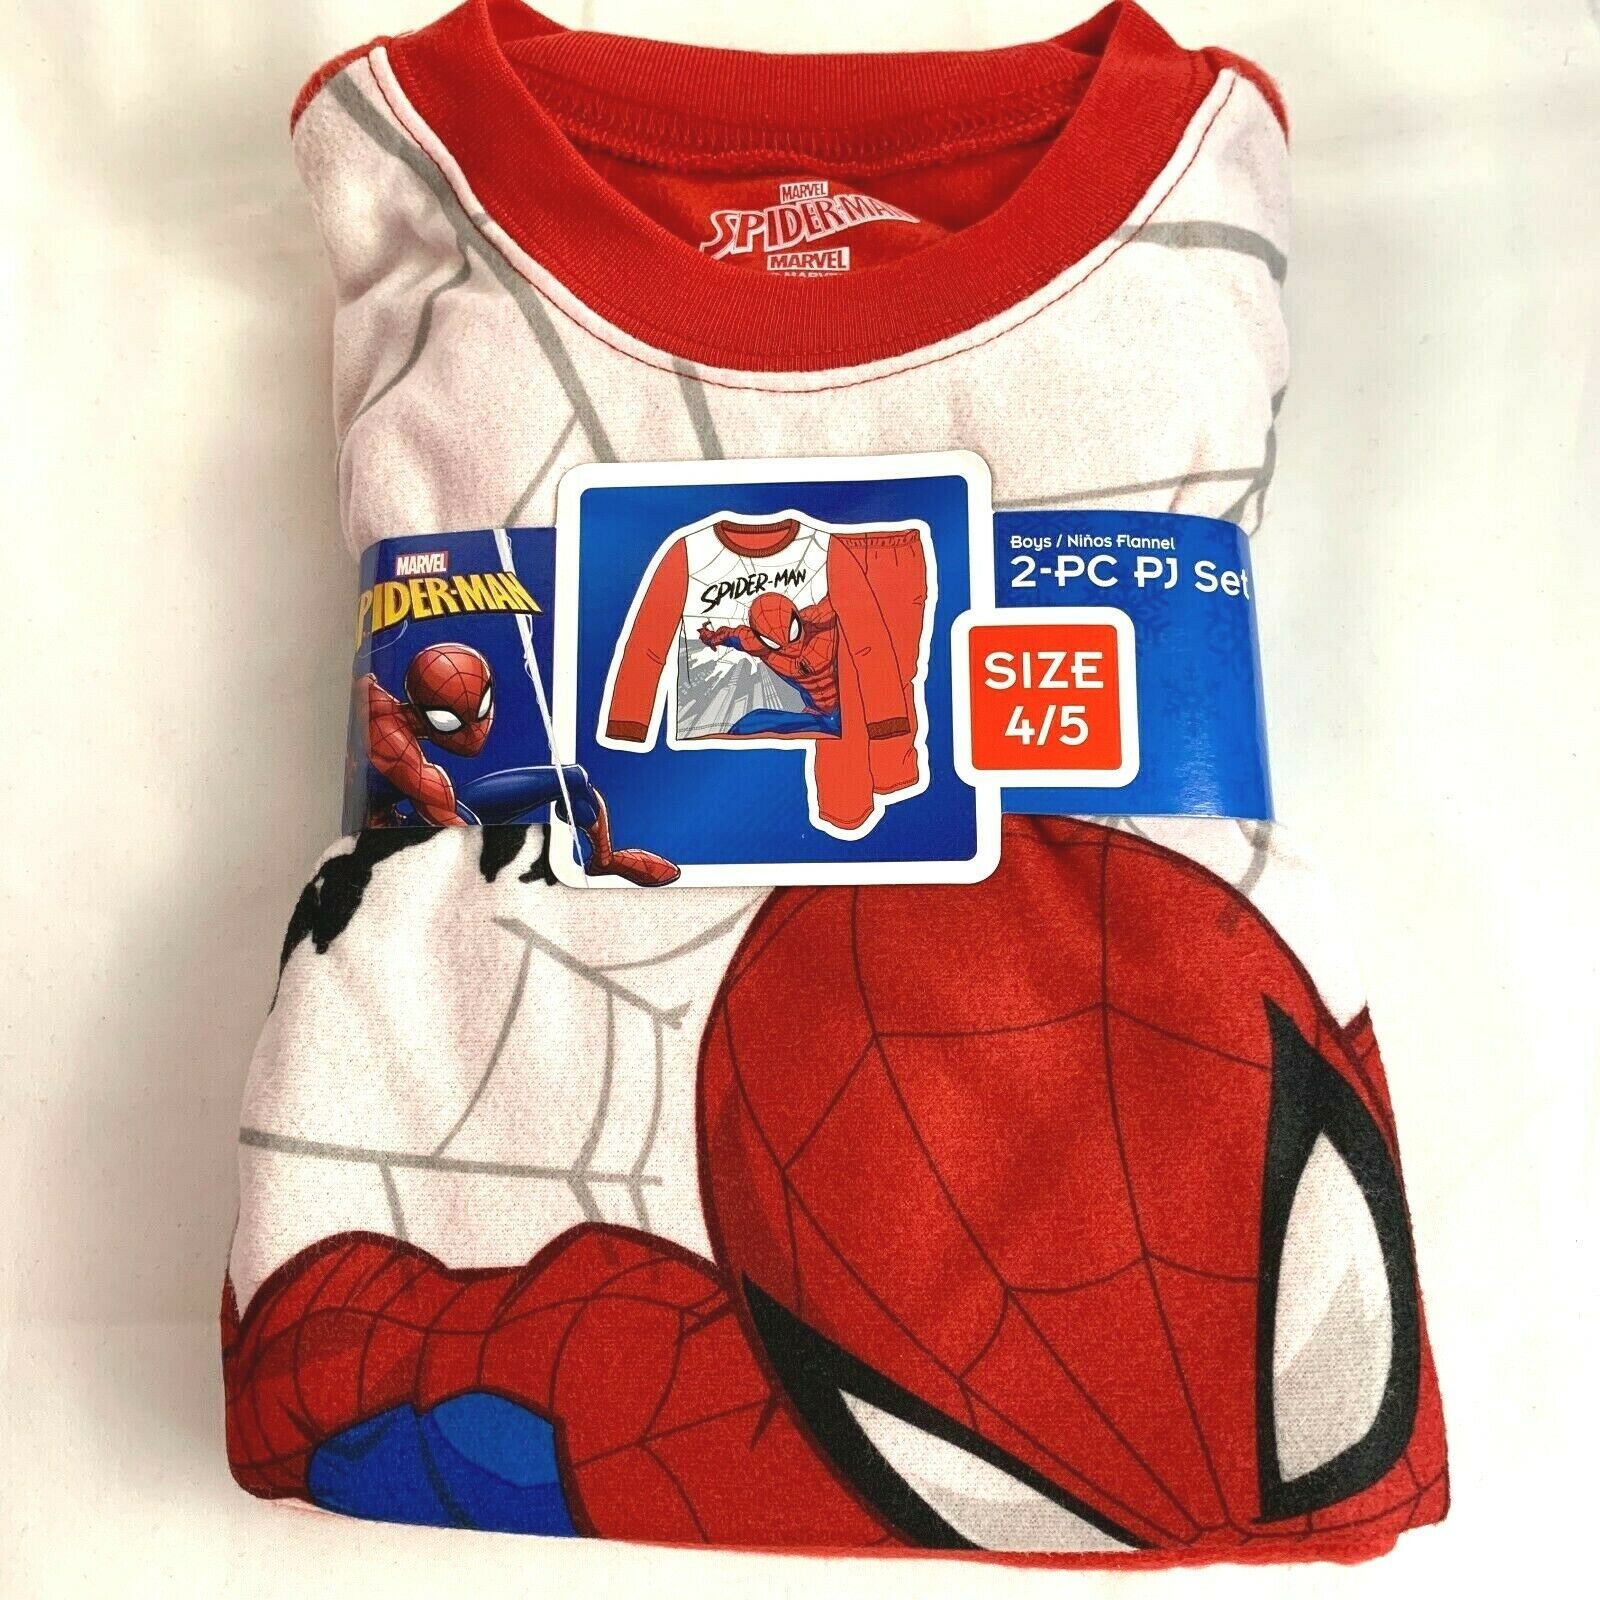 Spider-Man Pajamas 4 - 5 Boy 2 pc PJ Set Soft Flannel Flame Resistant